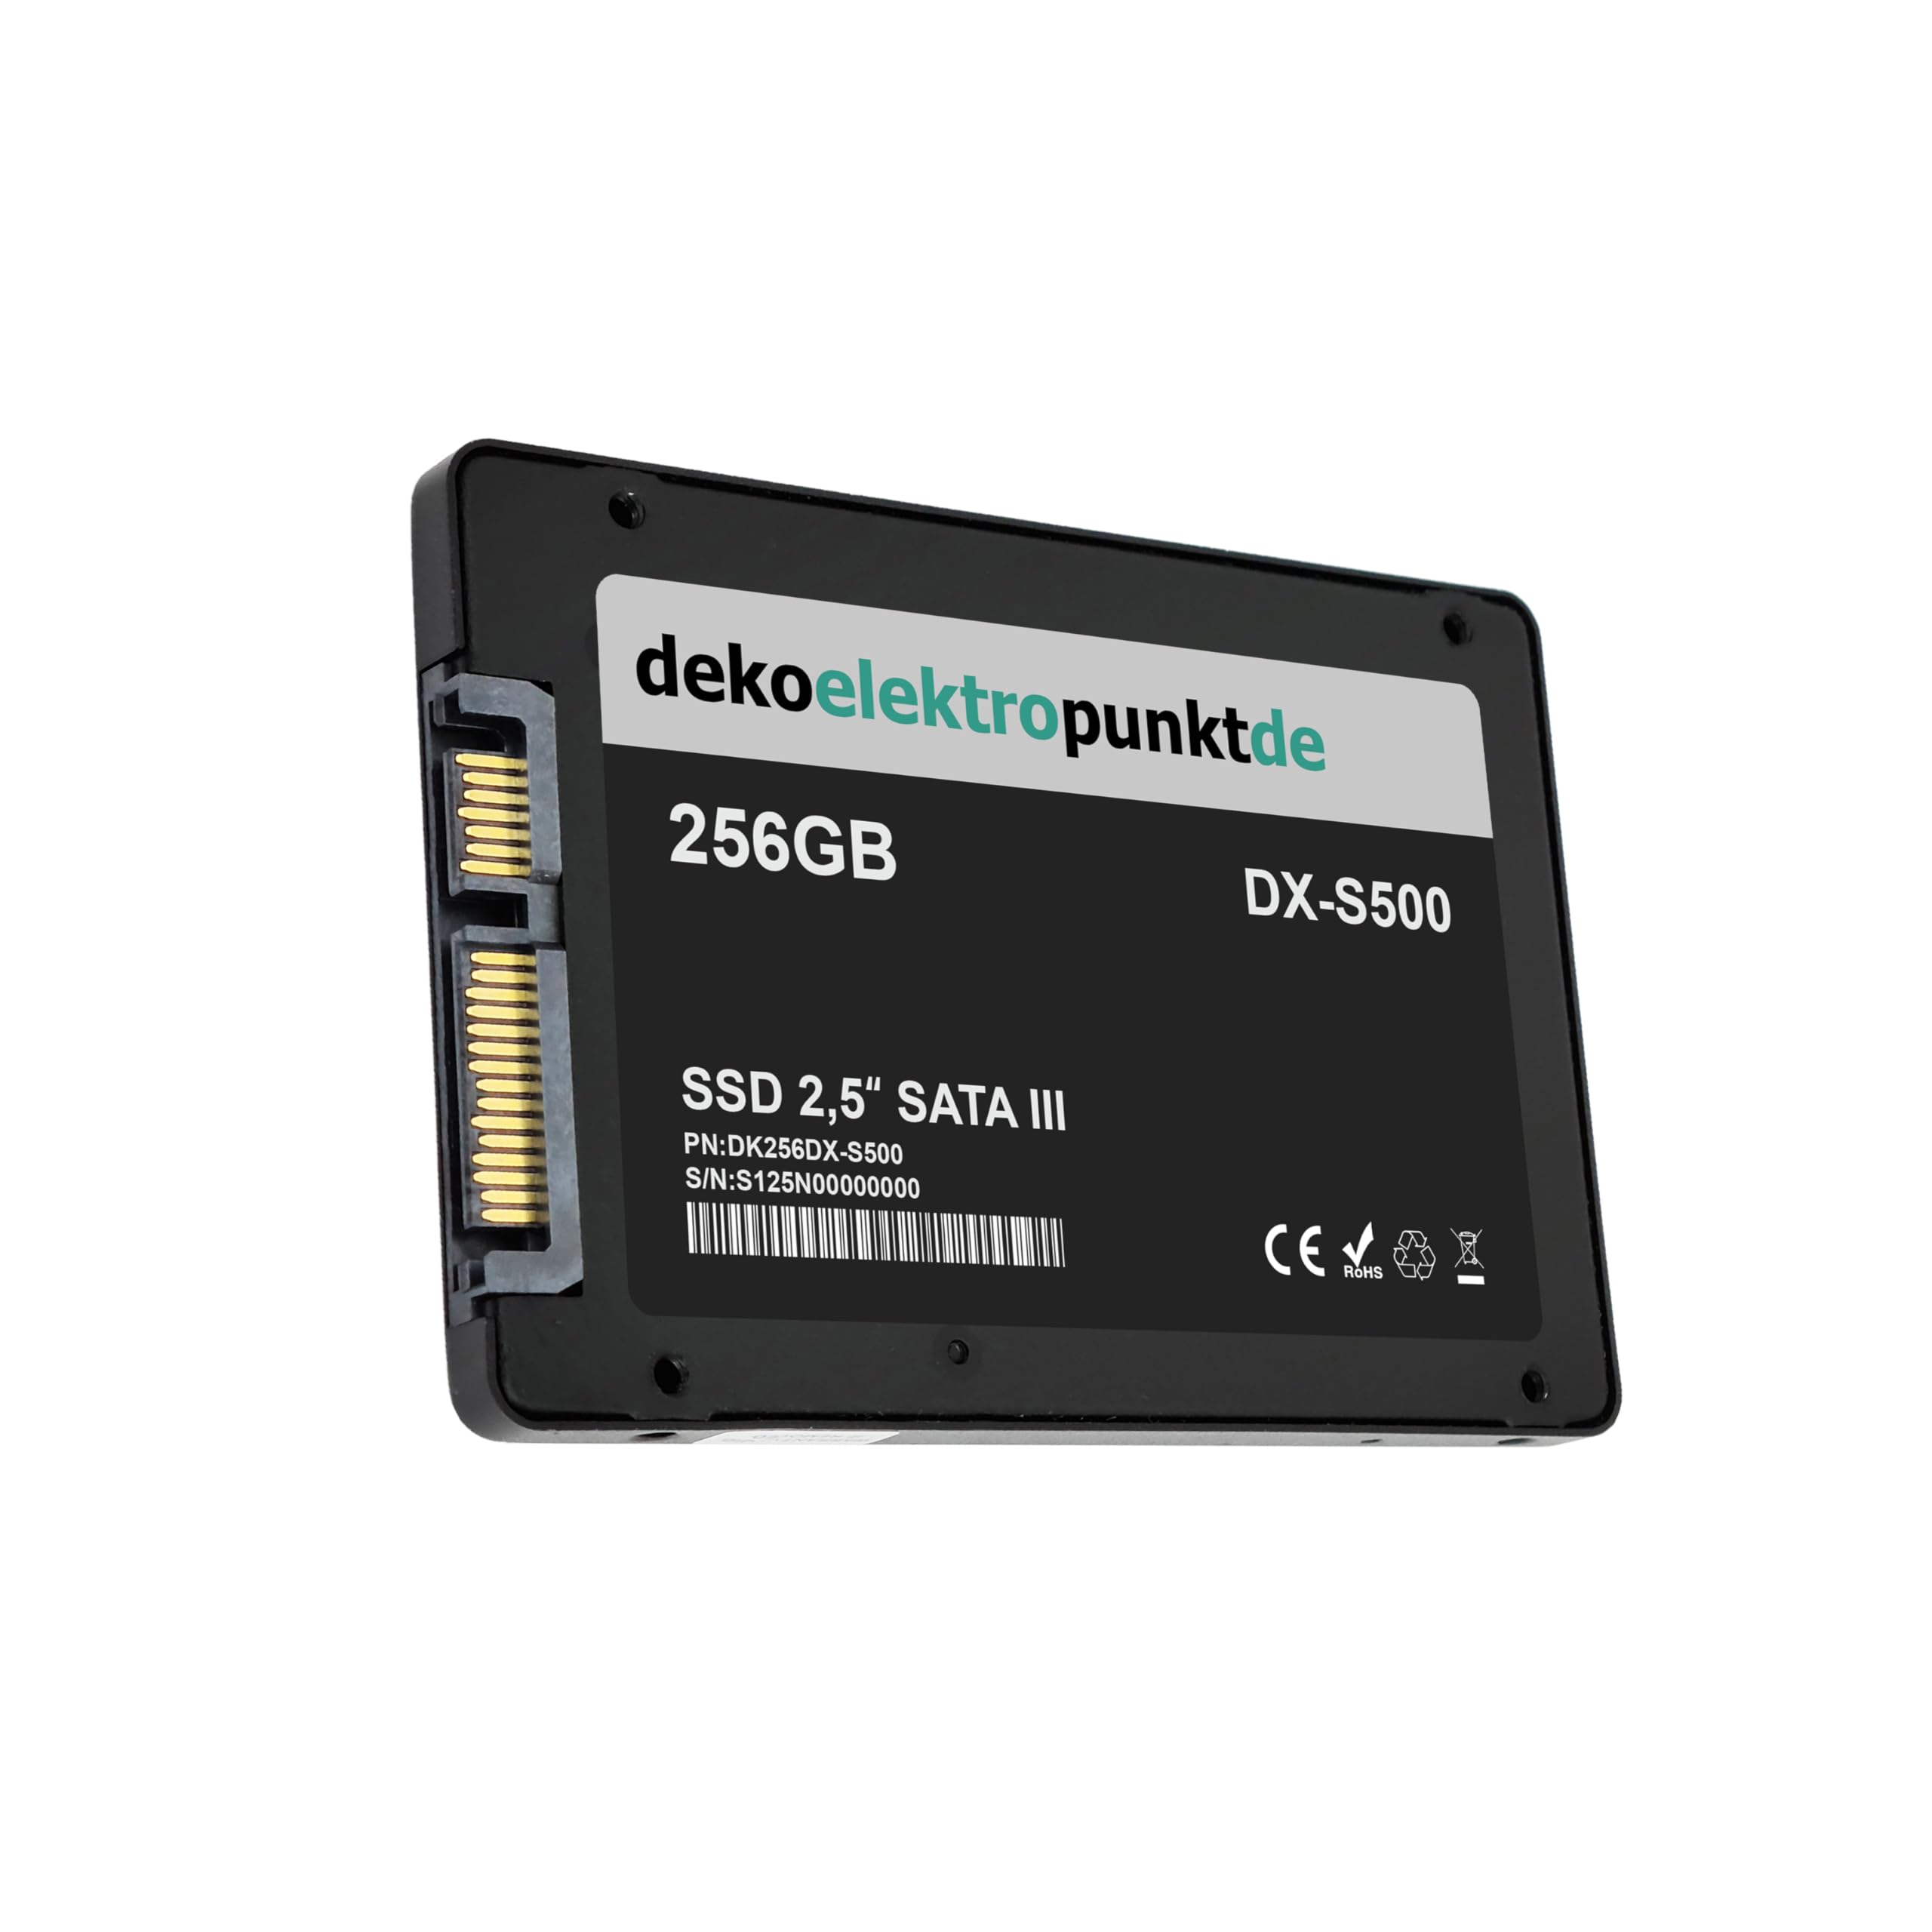 dekoelektropunktde 256GB SSD Festplatte kompatibel mit HP dv2014 dv7-4144 dv2509 dv2908 dv7-1135nr dv7-2046